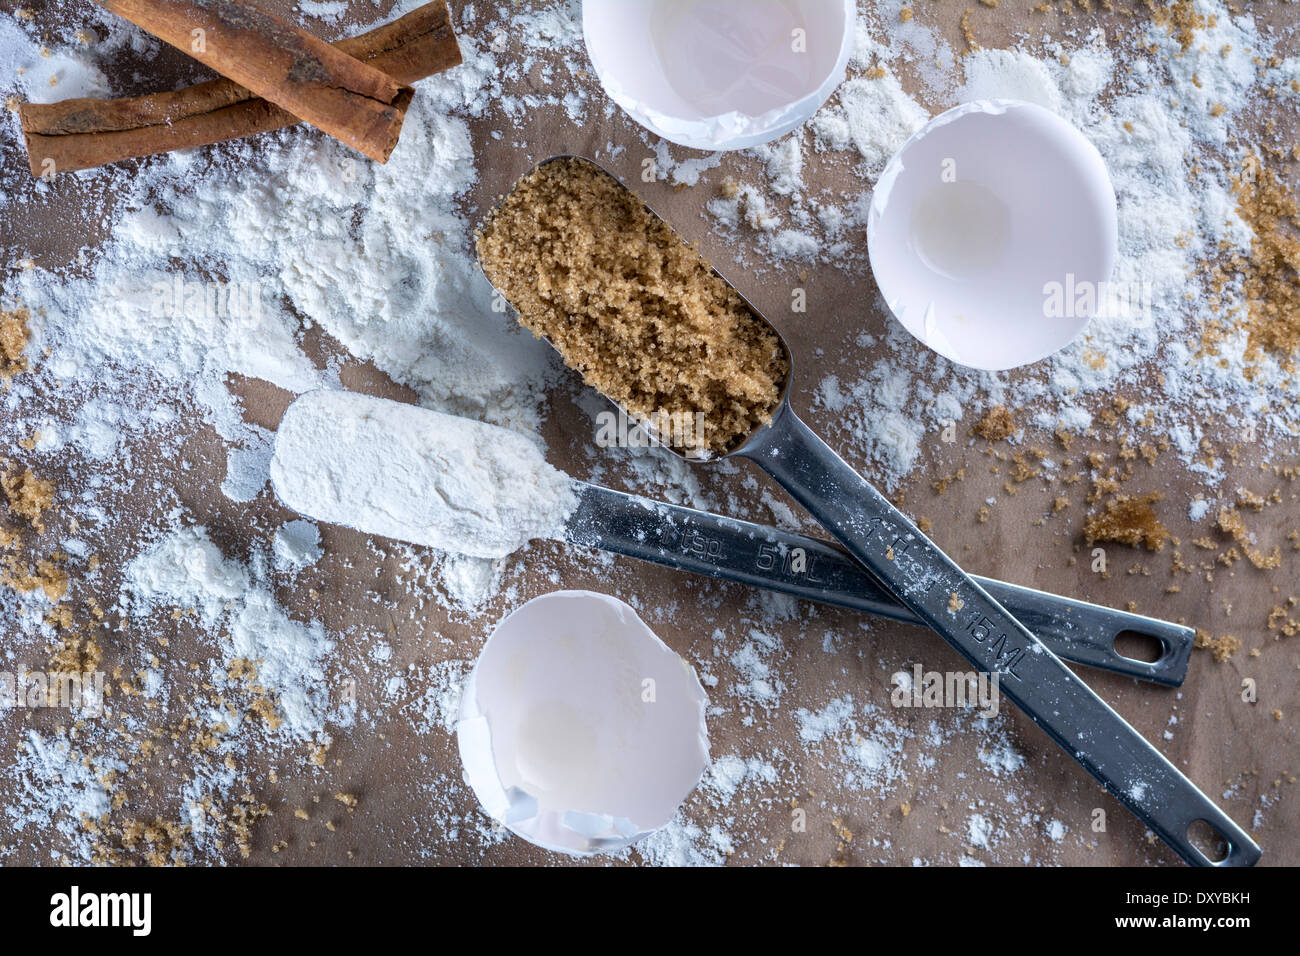 Baker's countertop with broken eggshells, flour, brown sugar and cinnamon sticks Stock Photo